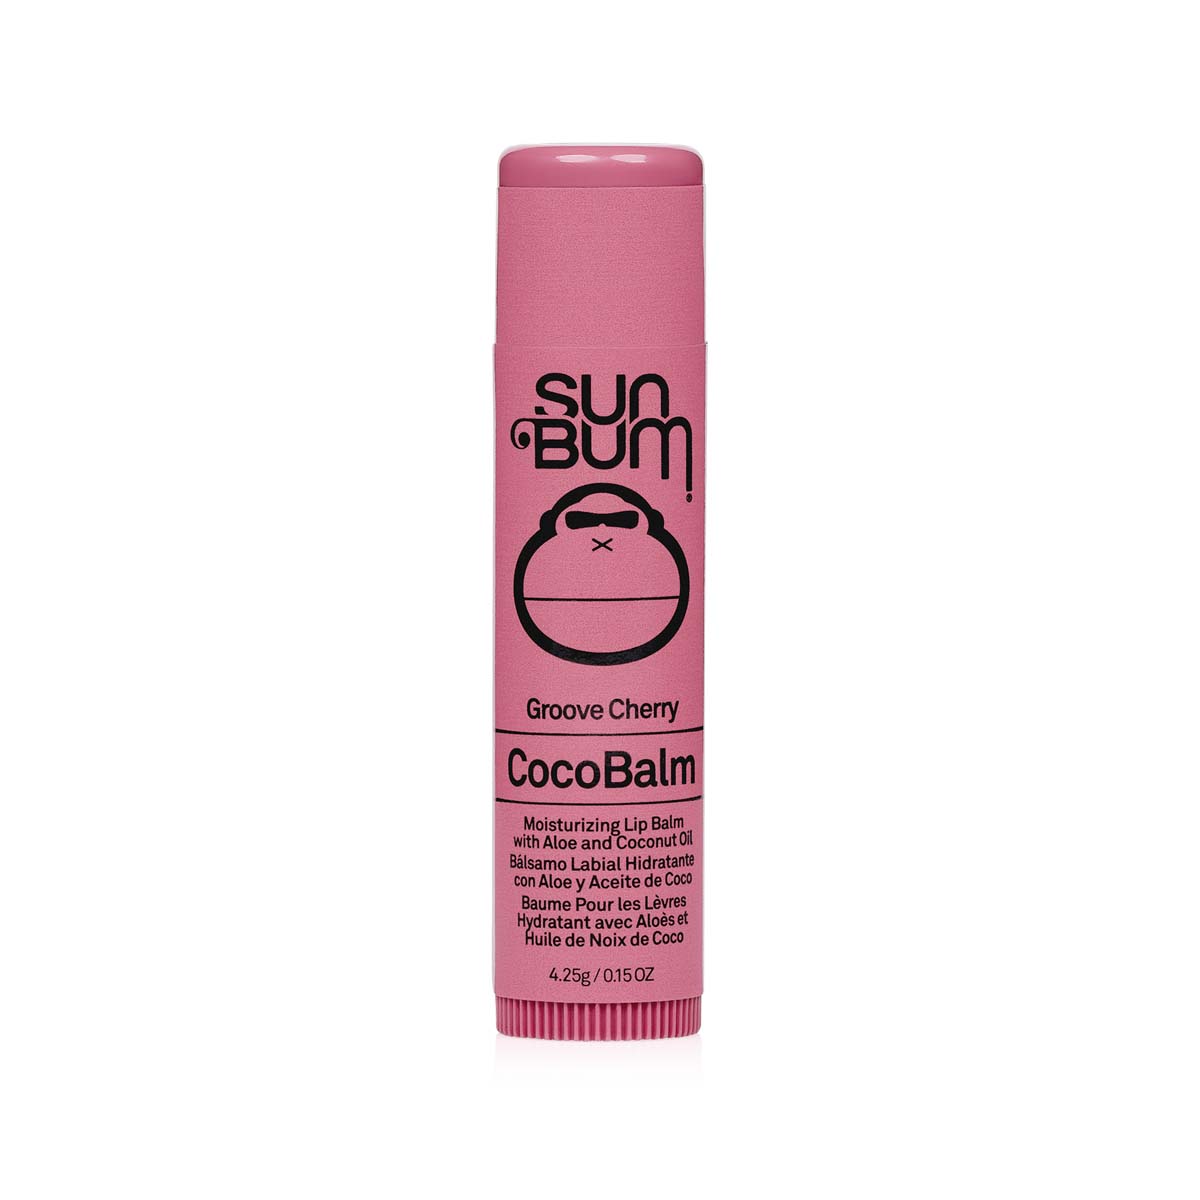 Sun Bum Cocobalm Moisturizing Lip Balm - Groove Cherry 4.25G